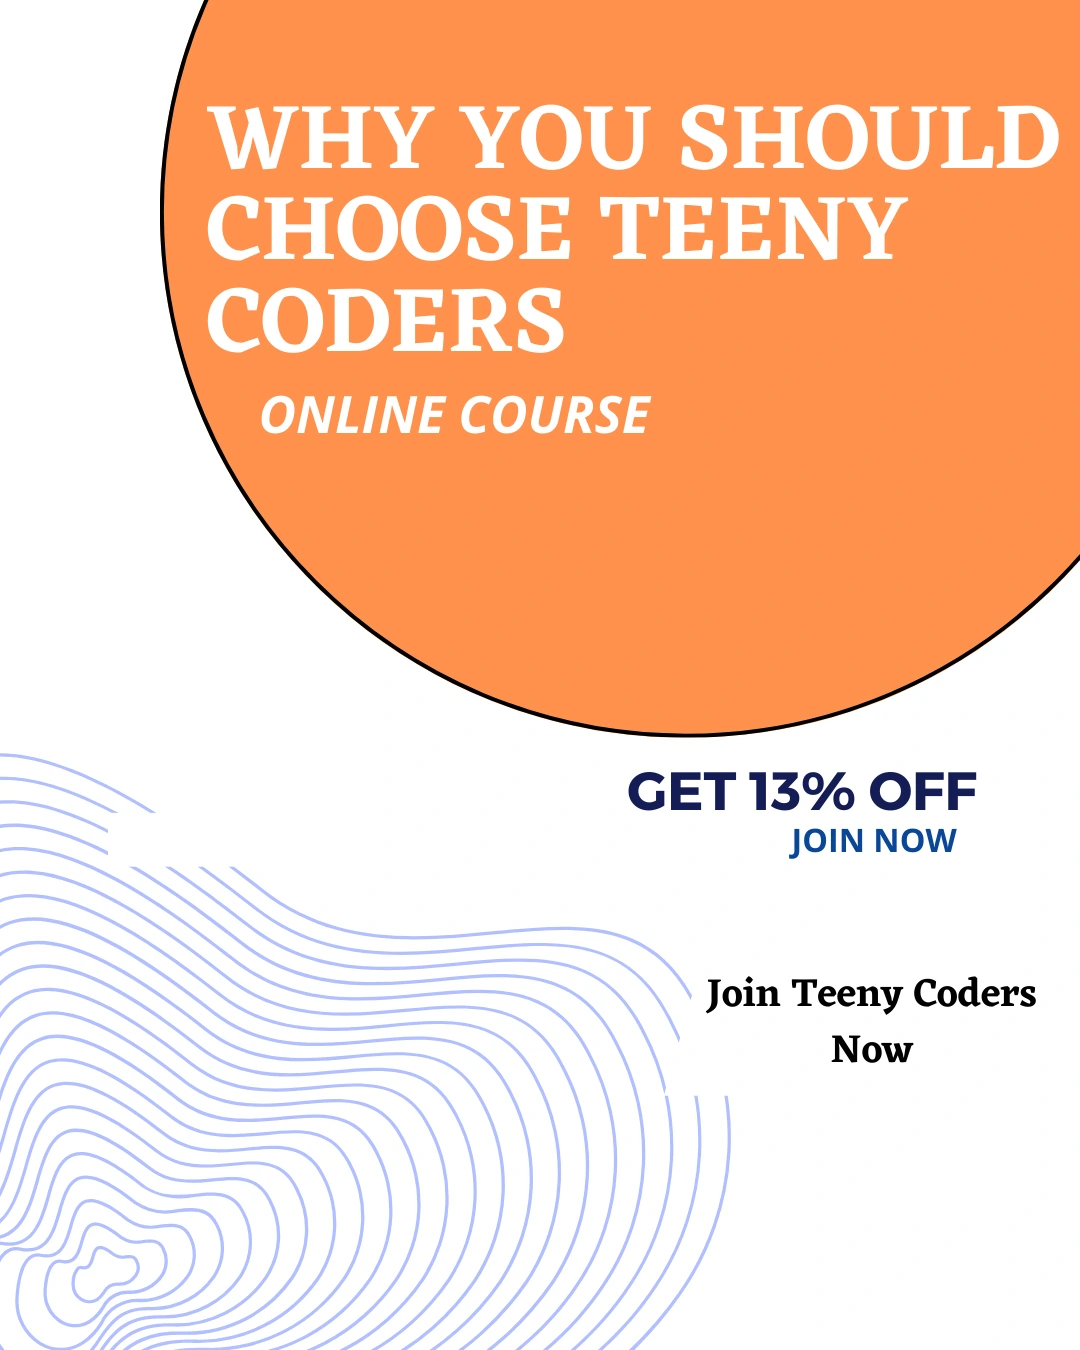 Teeny Coders advantages